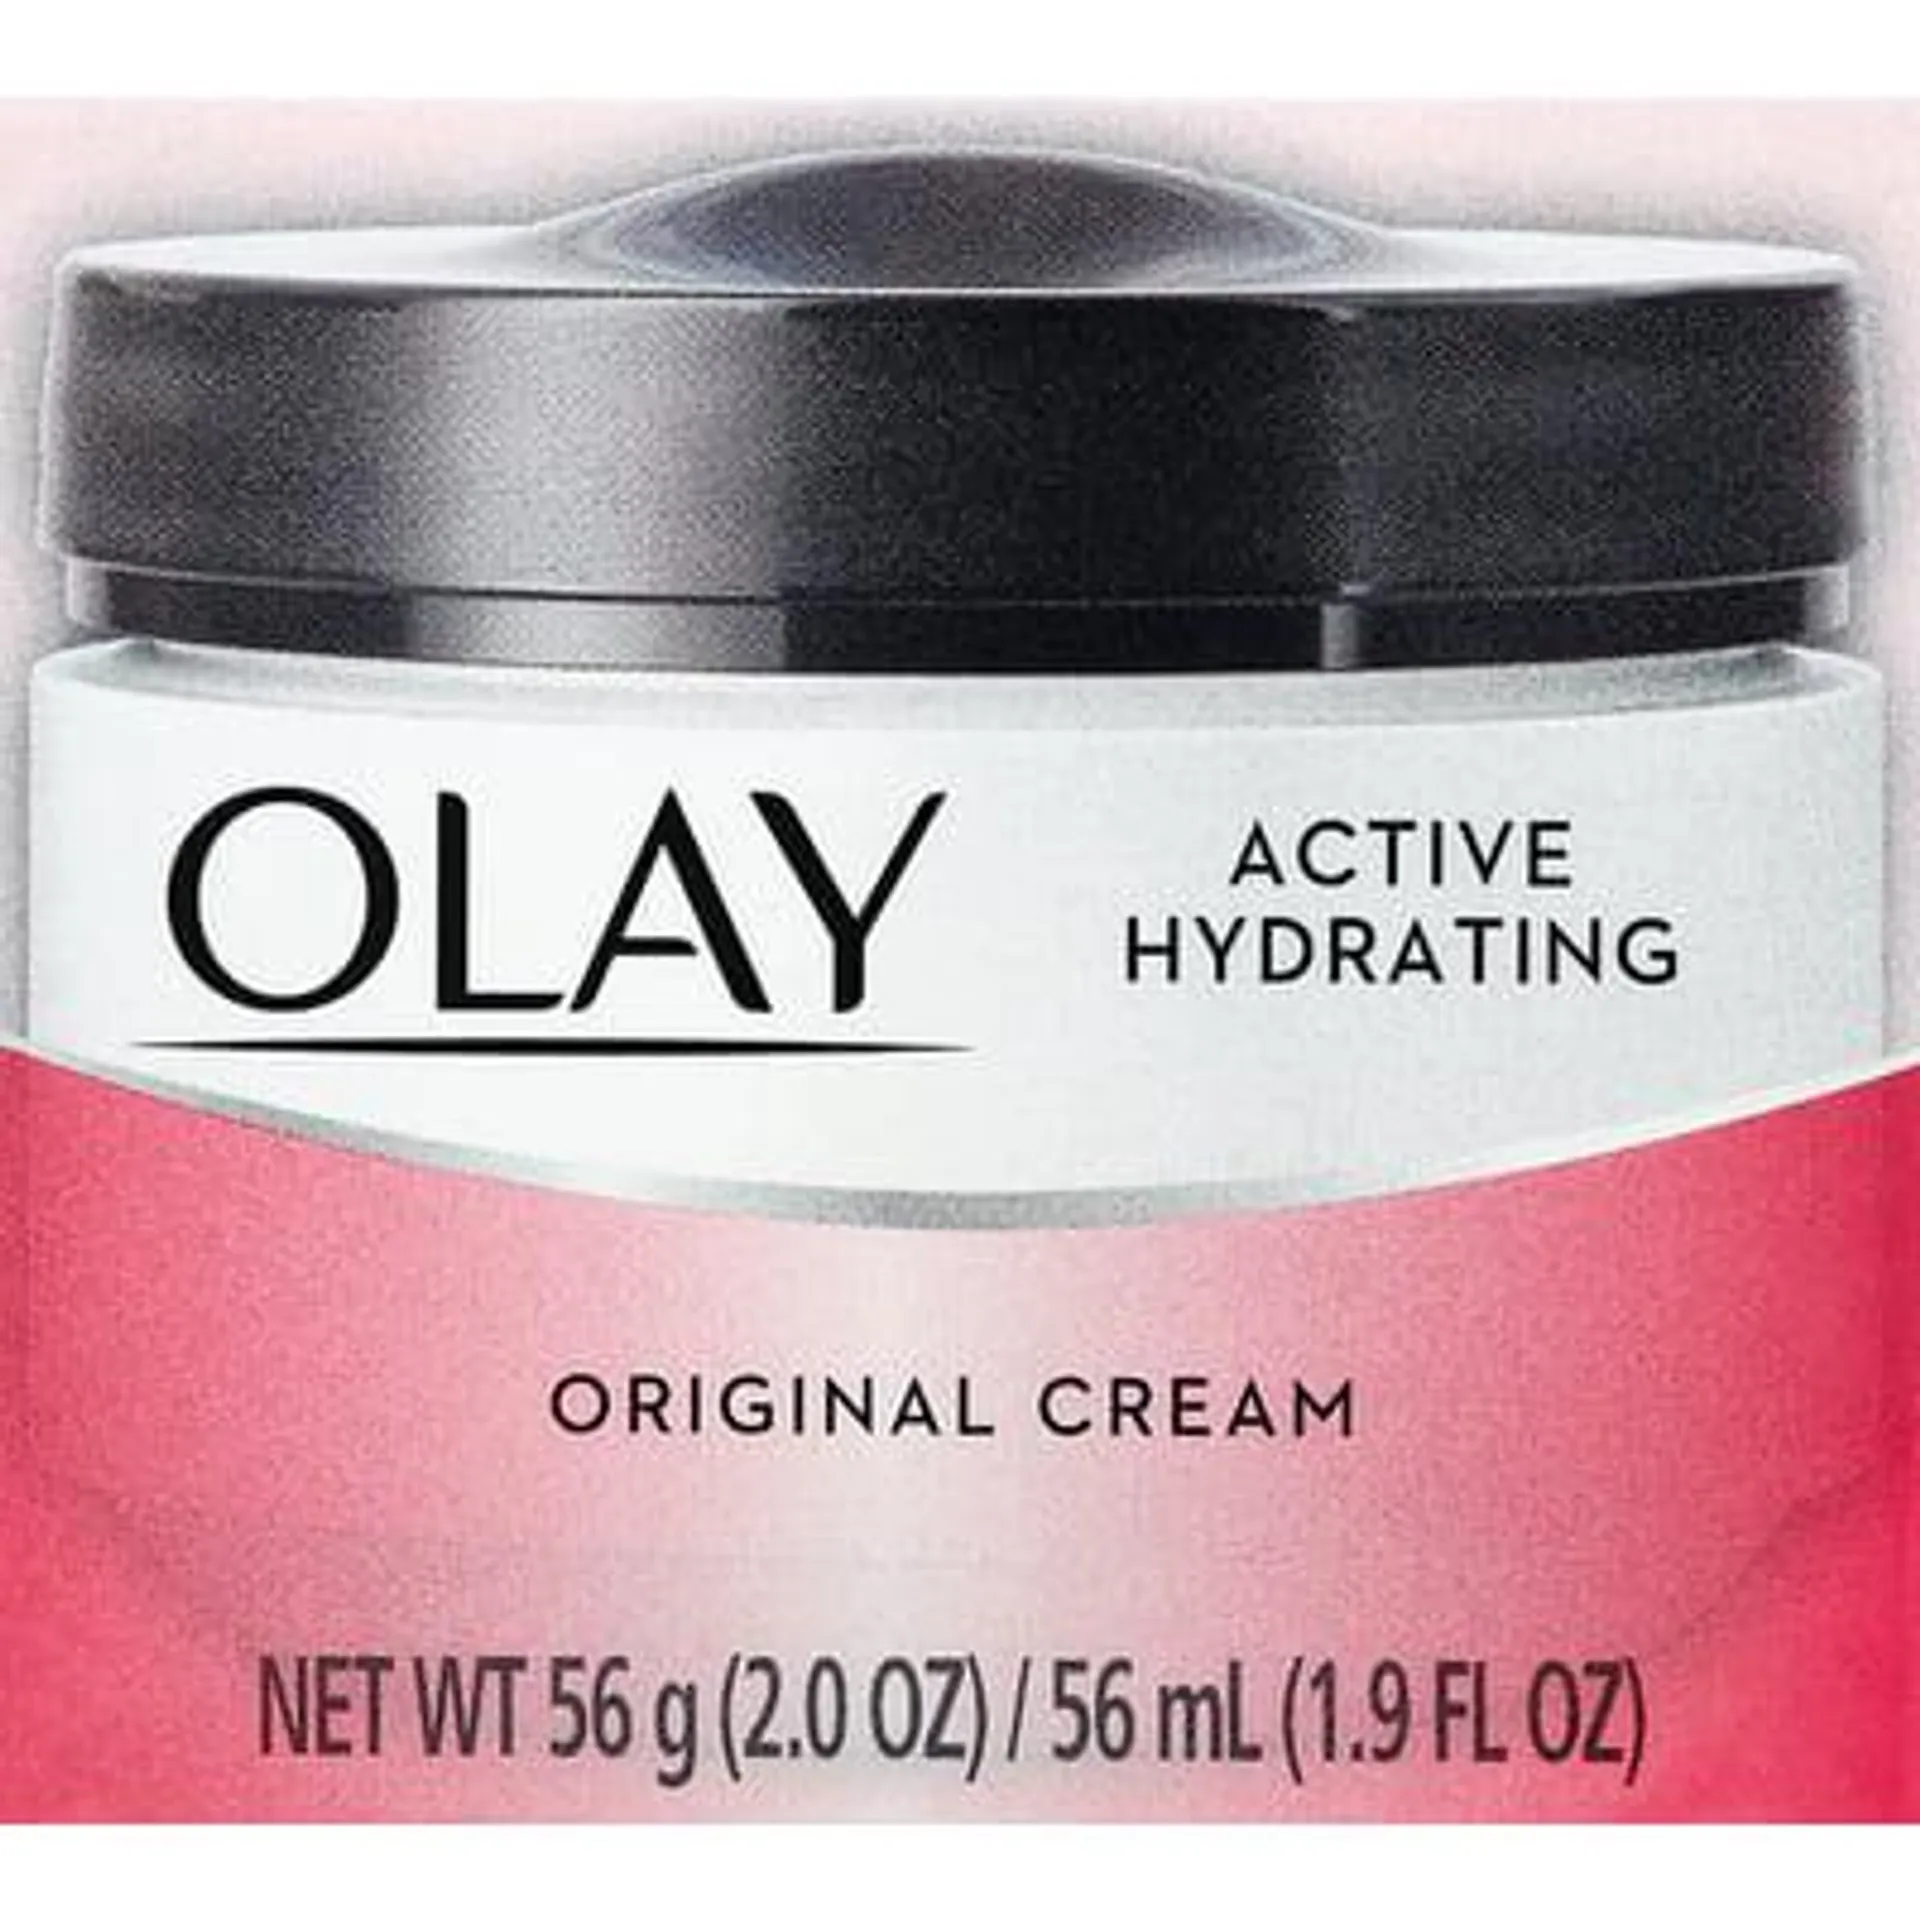 Olay, Original Cream, Active Hydrating